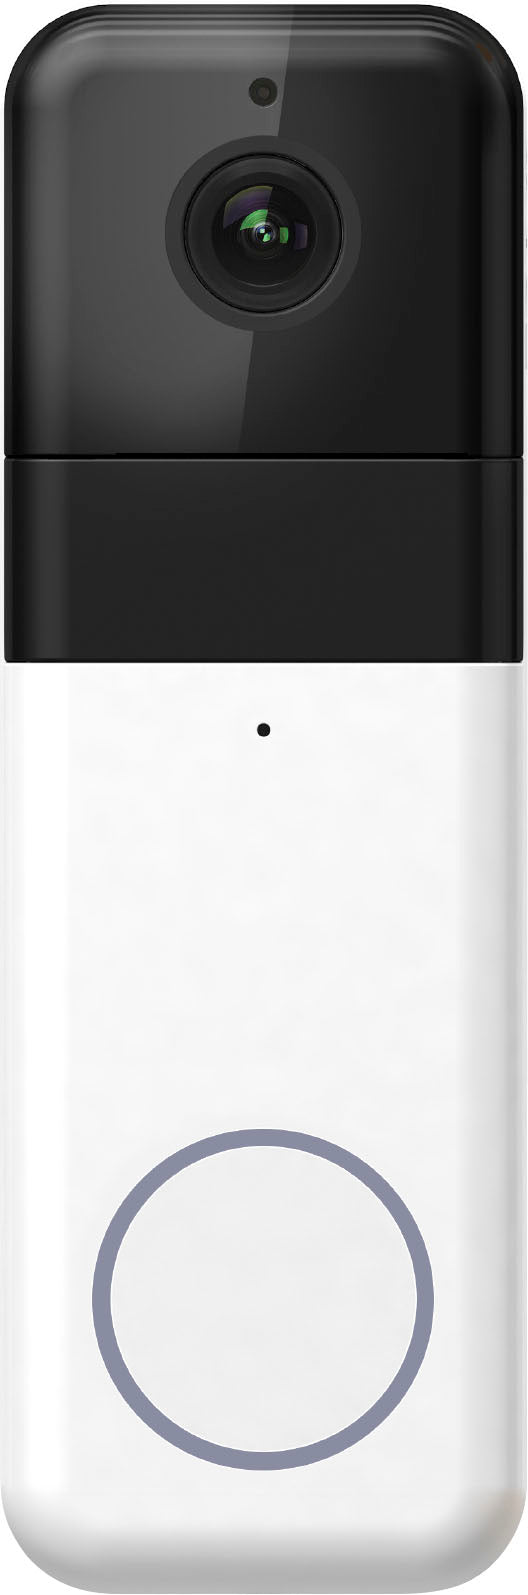 Wyze - Wireless Video Doorbell Camera Pro - White